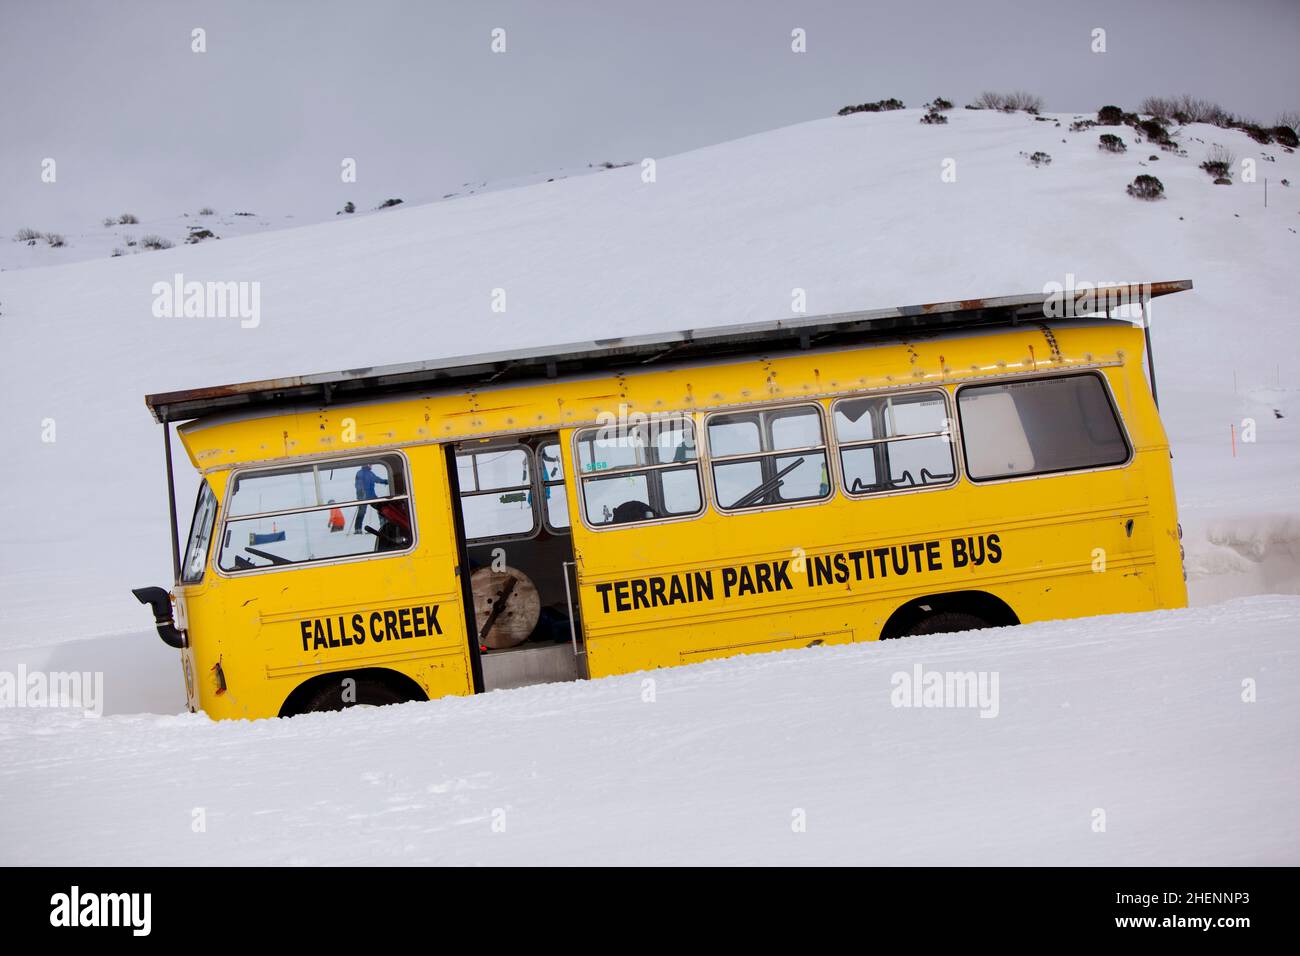 Falls Creek Terrain Park Institute Bus. Stock Photo